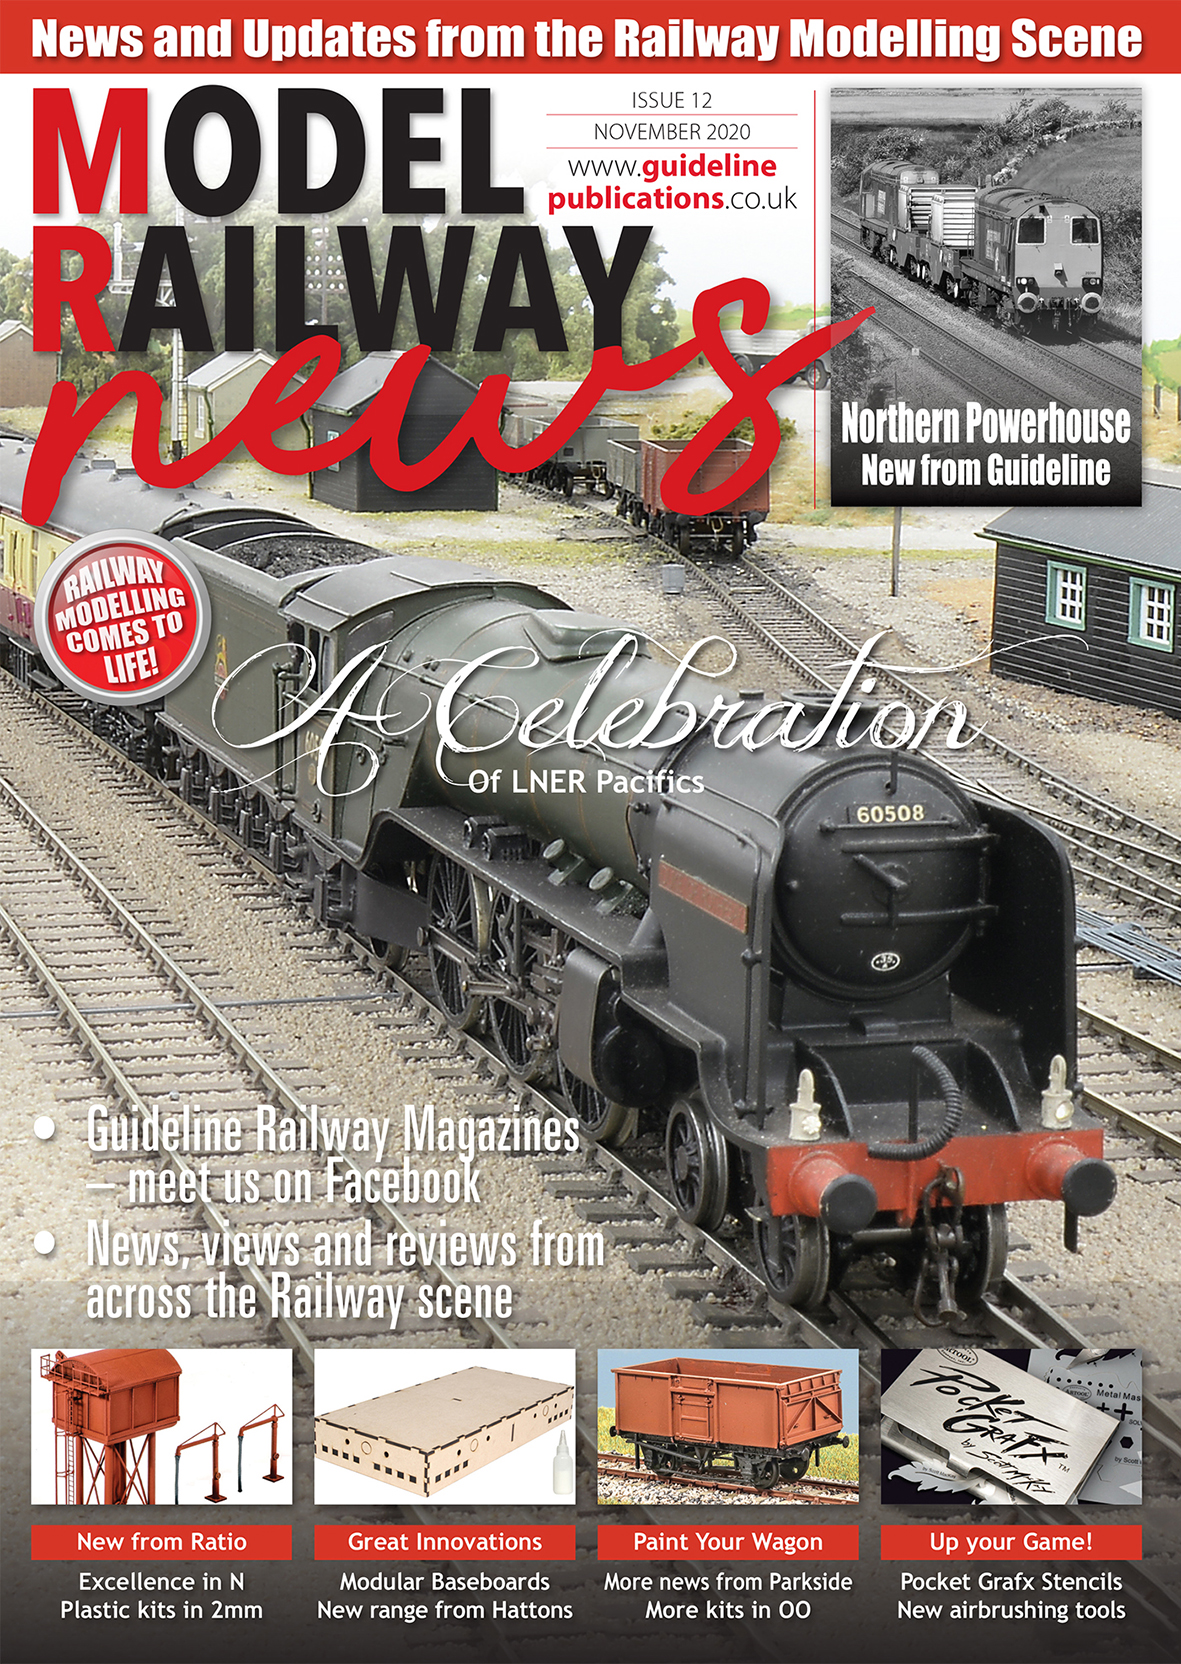 Guideline Publications Ltd Model Railway News issue 12 FREE DIGITAL ISSUE - November 